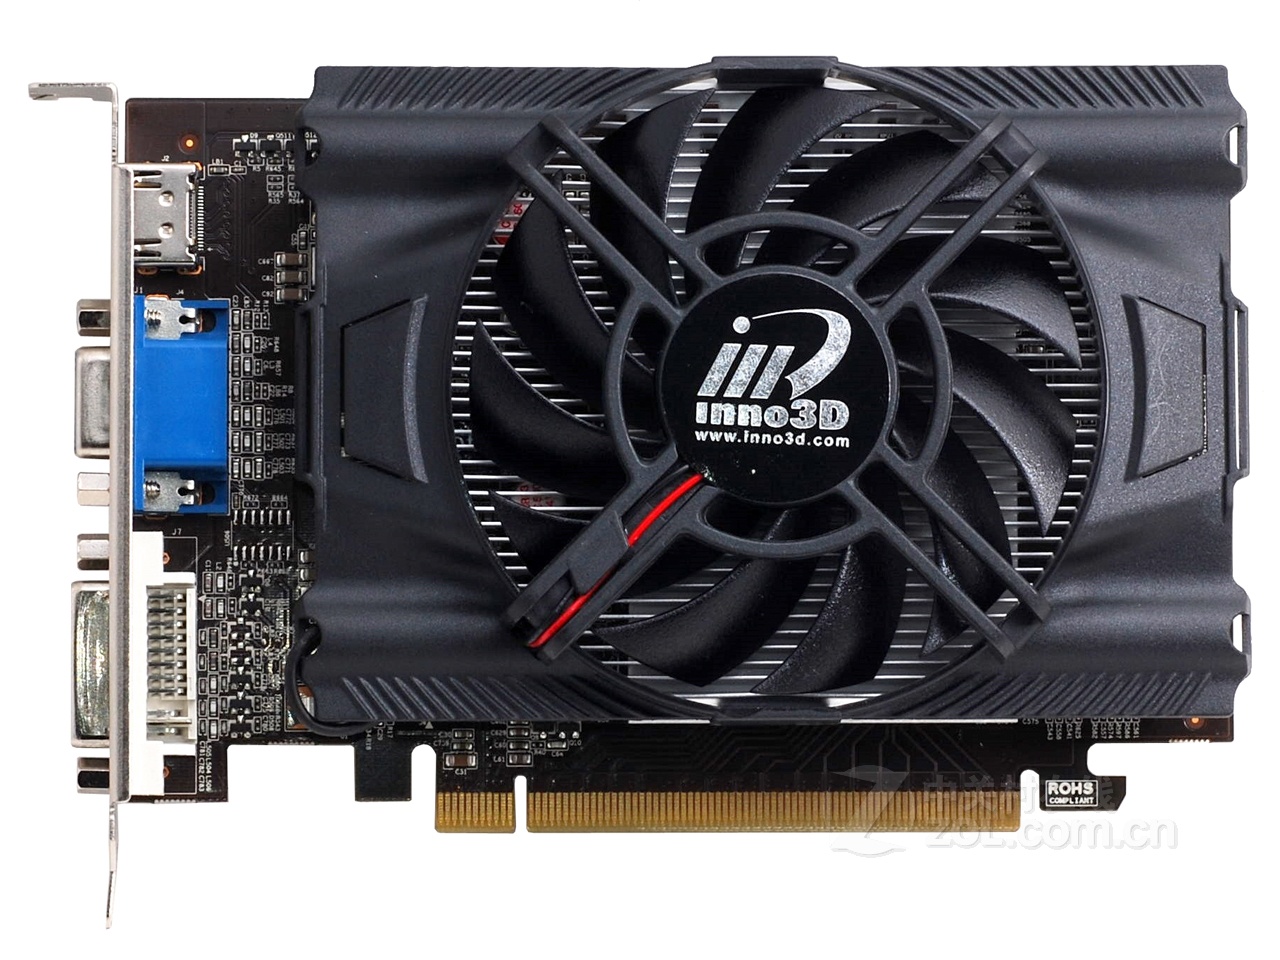 NVIDIAGT430 显卡：经典 GPU 的辉煌历史与性能解析  第3张